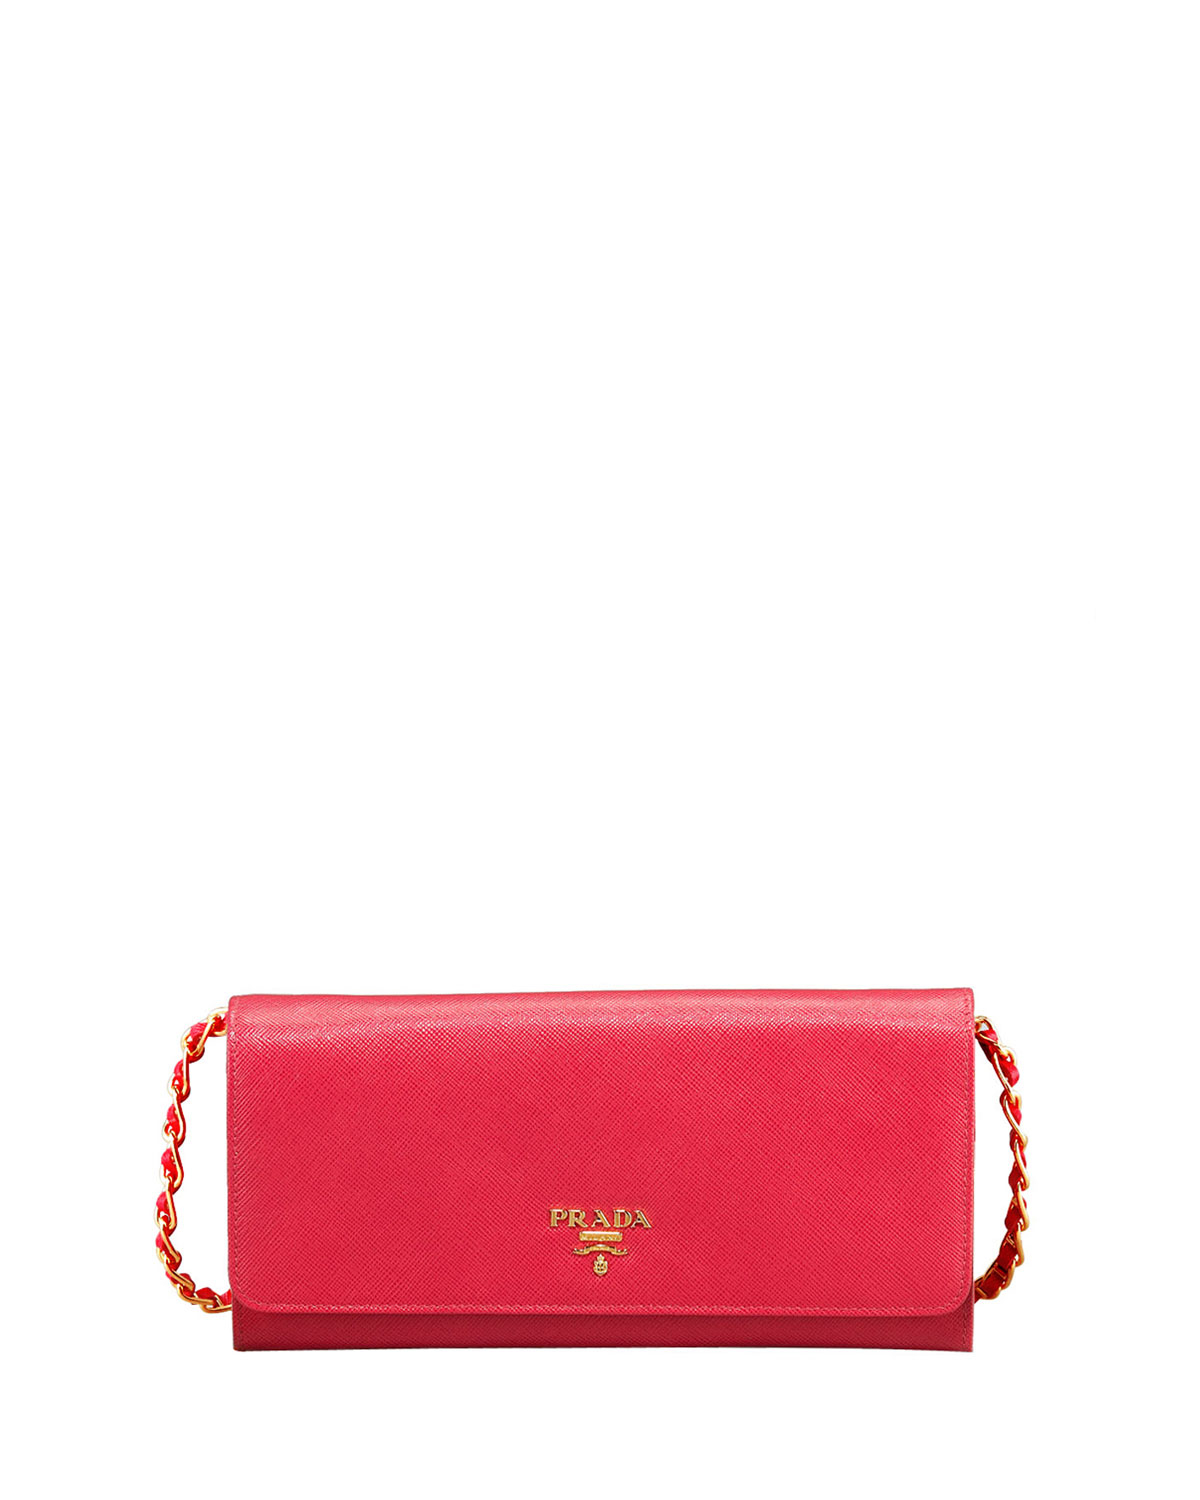 Lyst - Prada Saffiano Chain Crossbody Wallet in Red